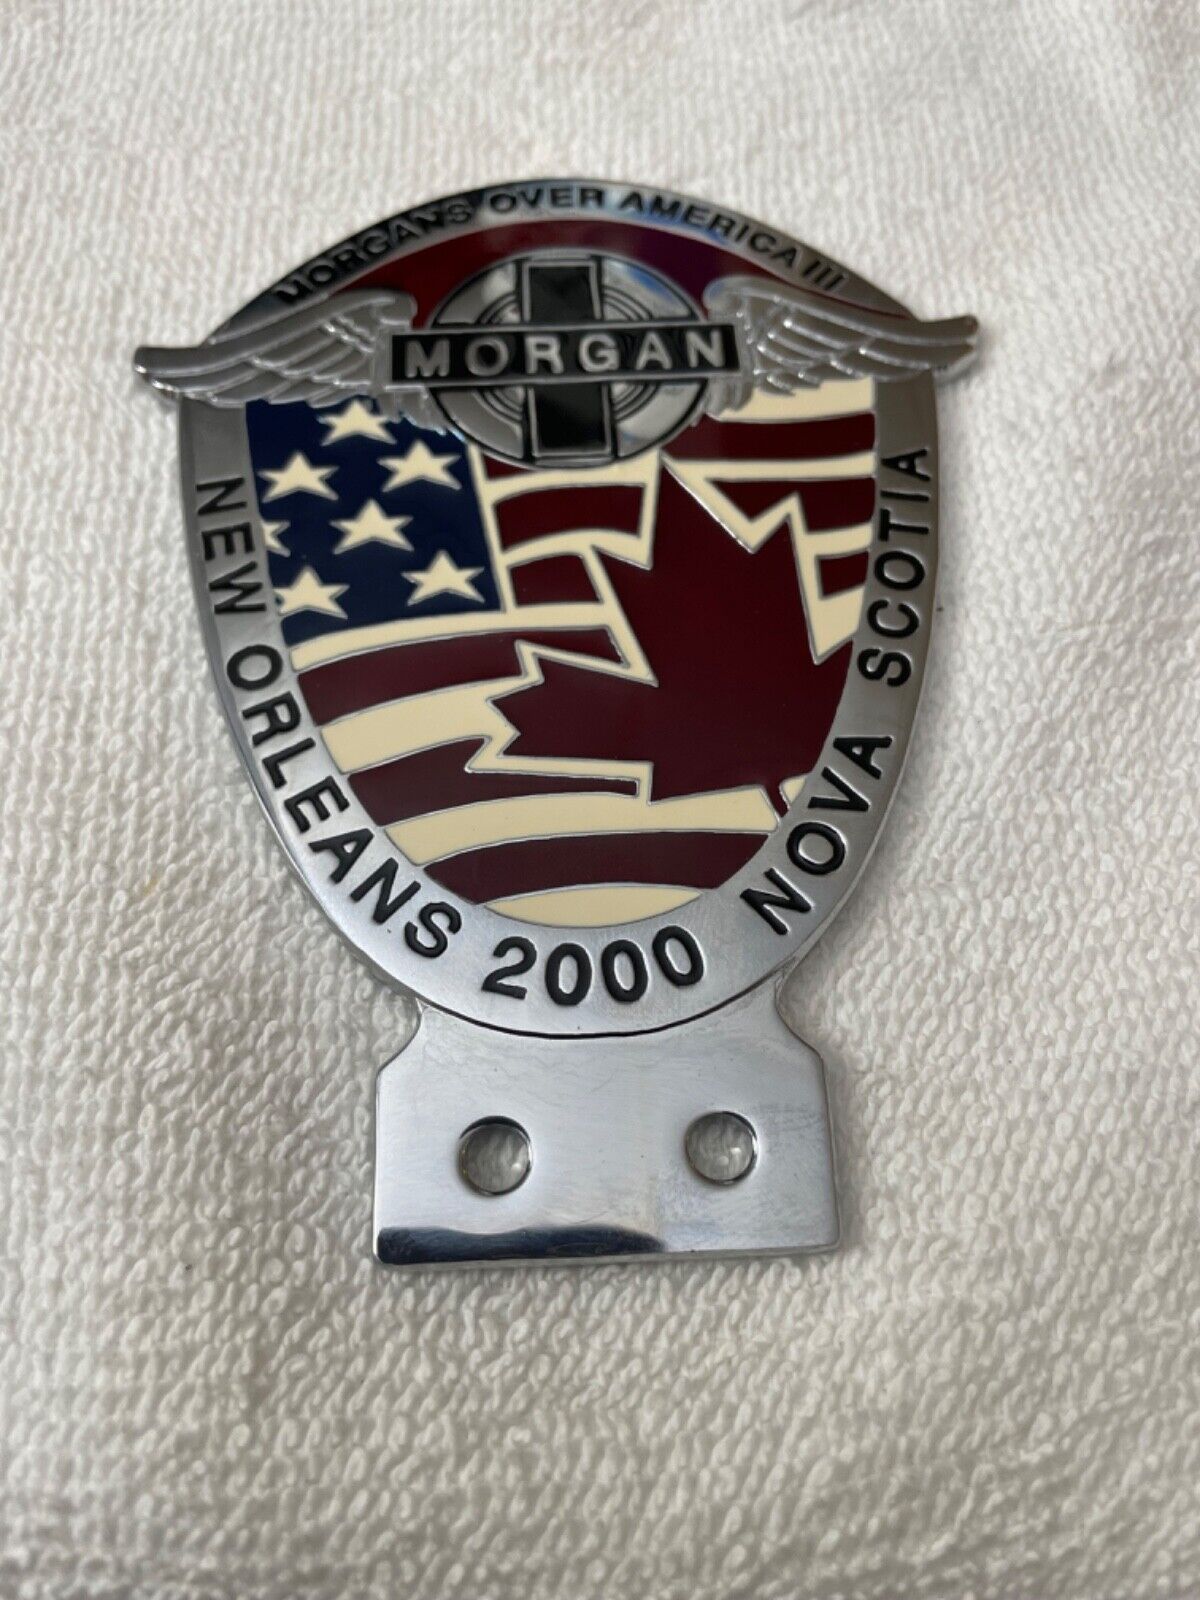 2000 Morgan’s Over America Badge